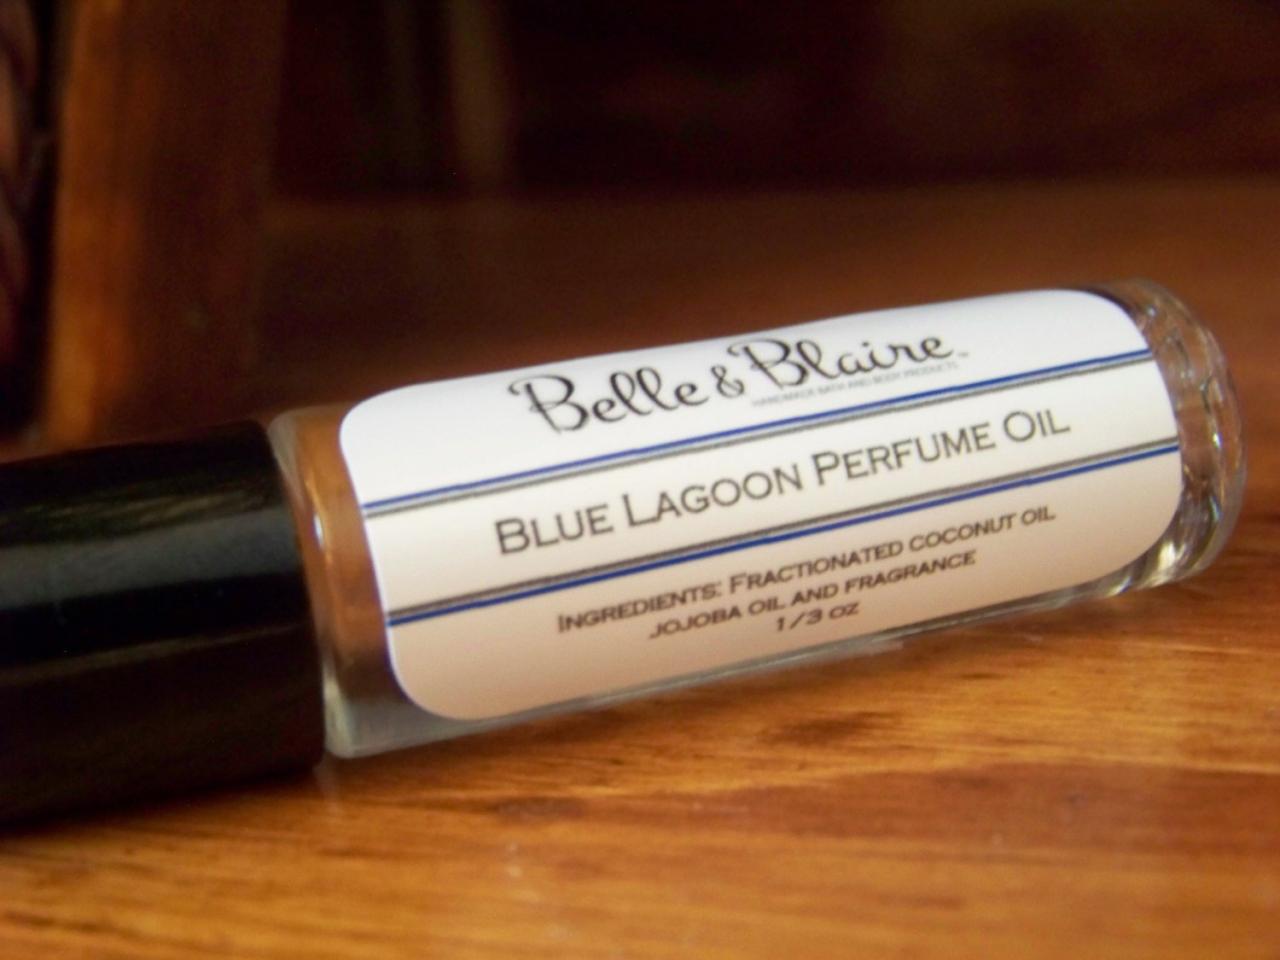 Blue Lagoon Perfume Oil- Ocean Mist, Cyclamen Petals, Sea Moss, Sea Salt, Water Mint, Vetiver, Cedarwood- Roll On Perfume